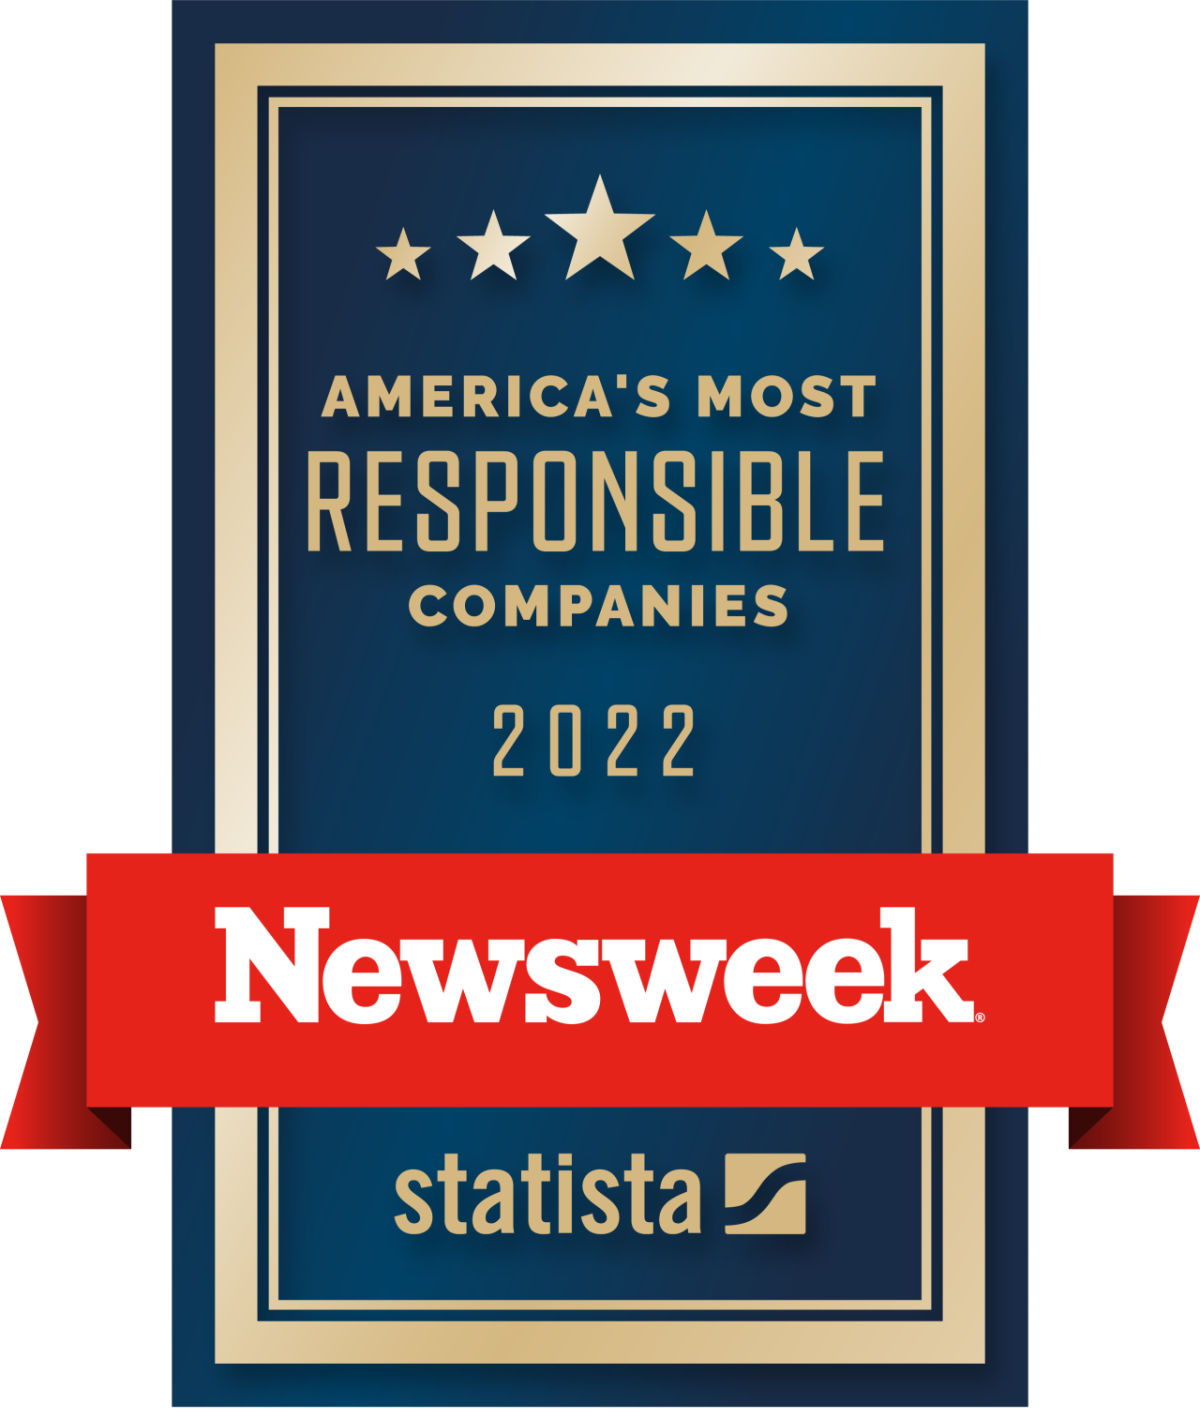 Newsweek: America's most responsible companies 2022 logo